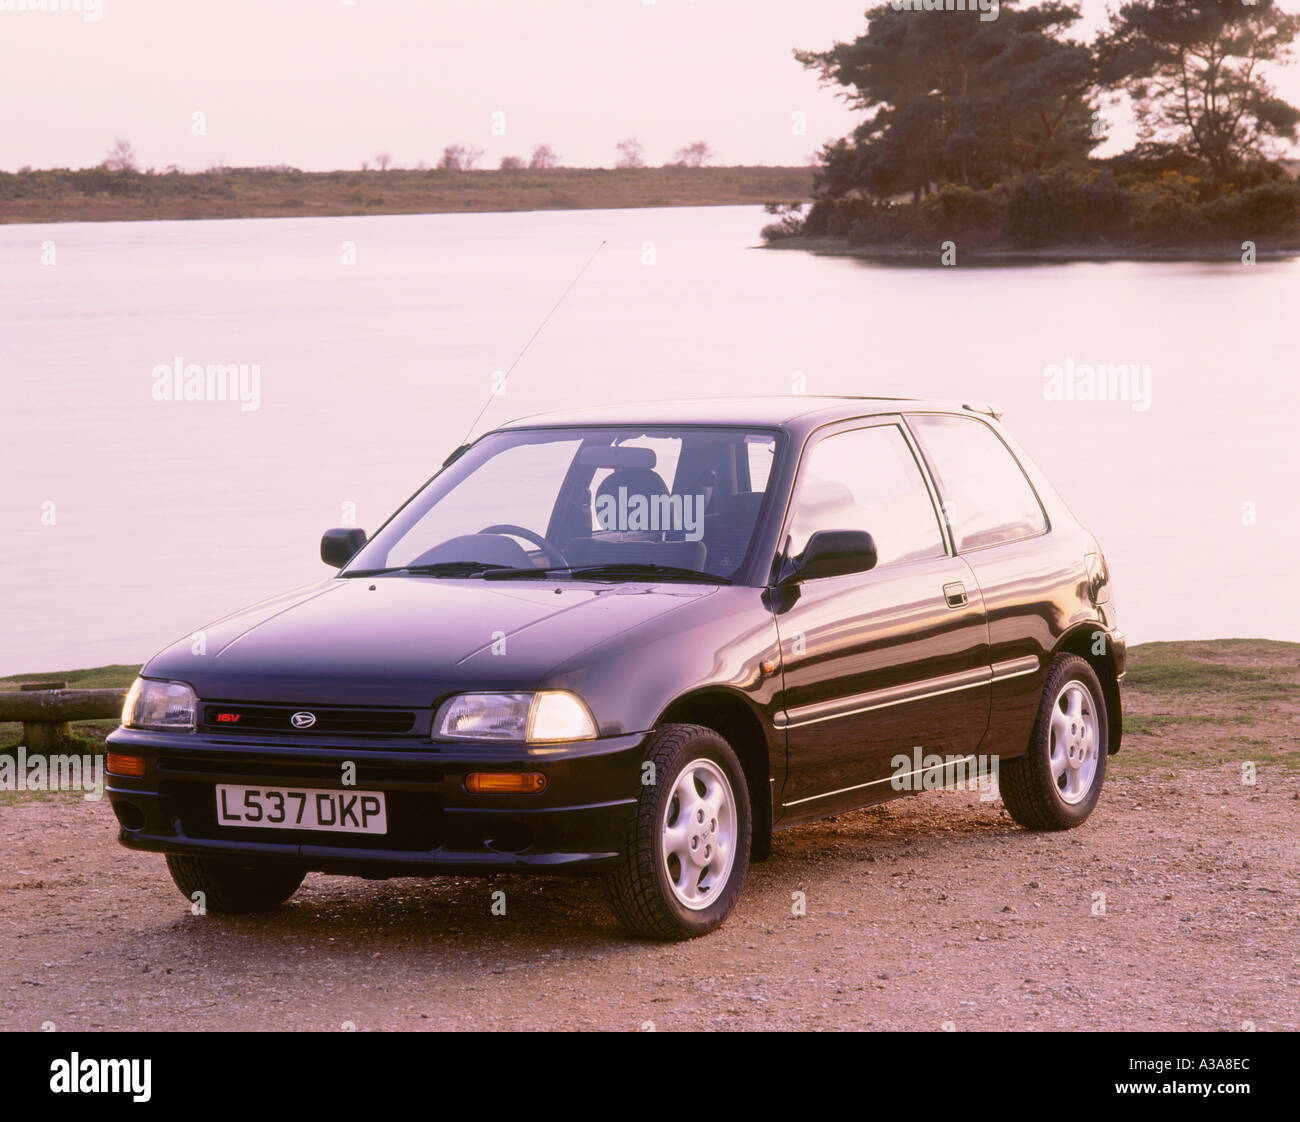 1994 Daihatsu Charade Gti Stock Photo